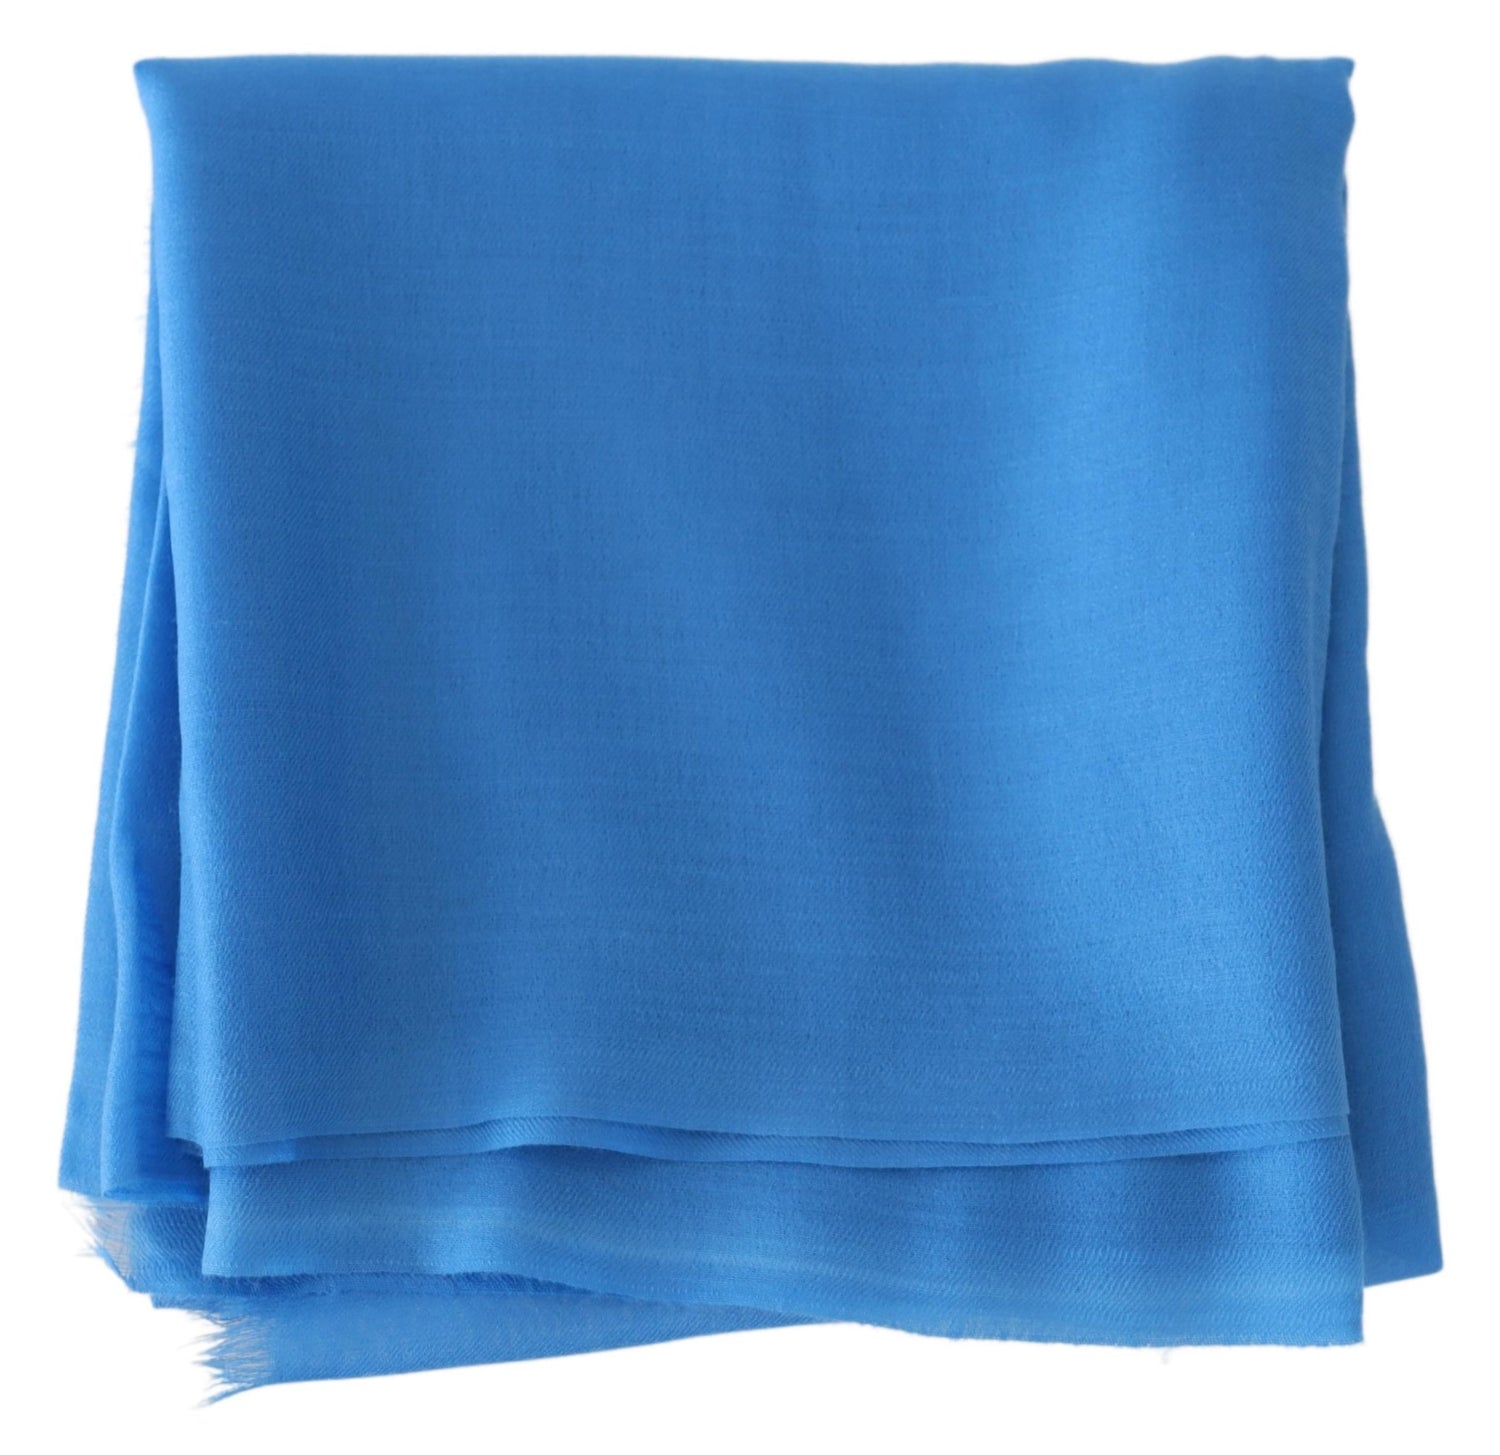 Blue Wool Unisex Neck Warmer Wrap Scarf